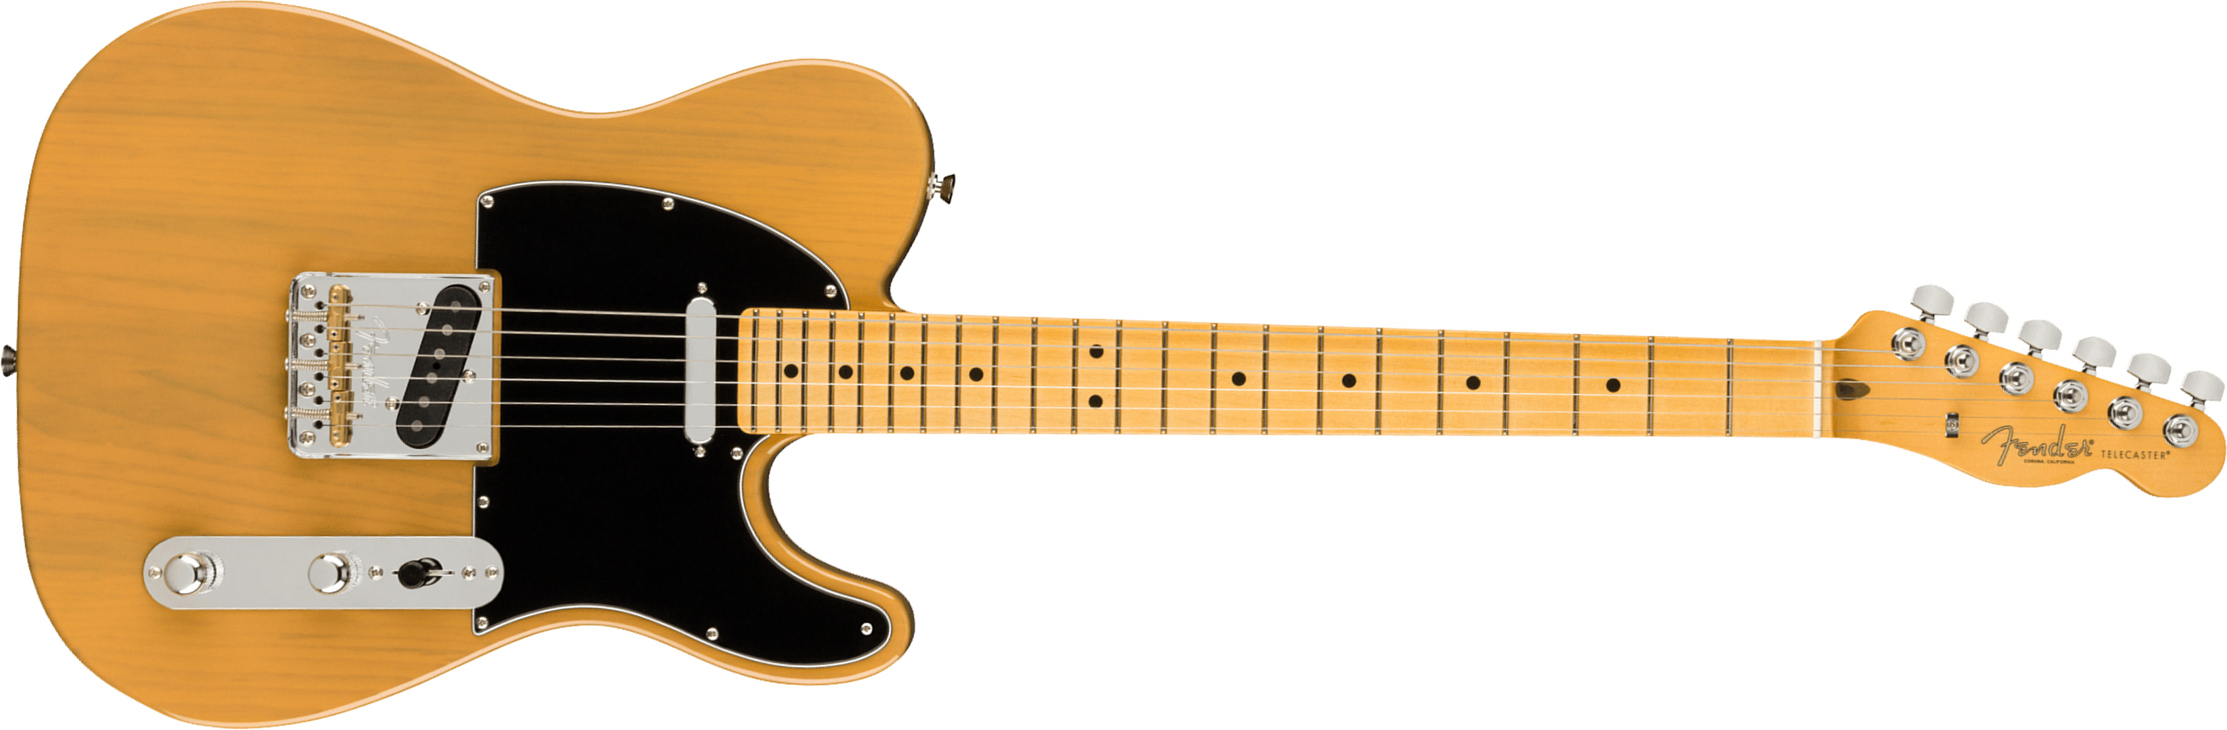 Fender Tele American Professional Ii Usa Mn - Butterscotch Blonde - Televorm elektrische gitaar - Main picture